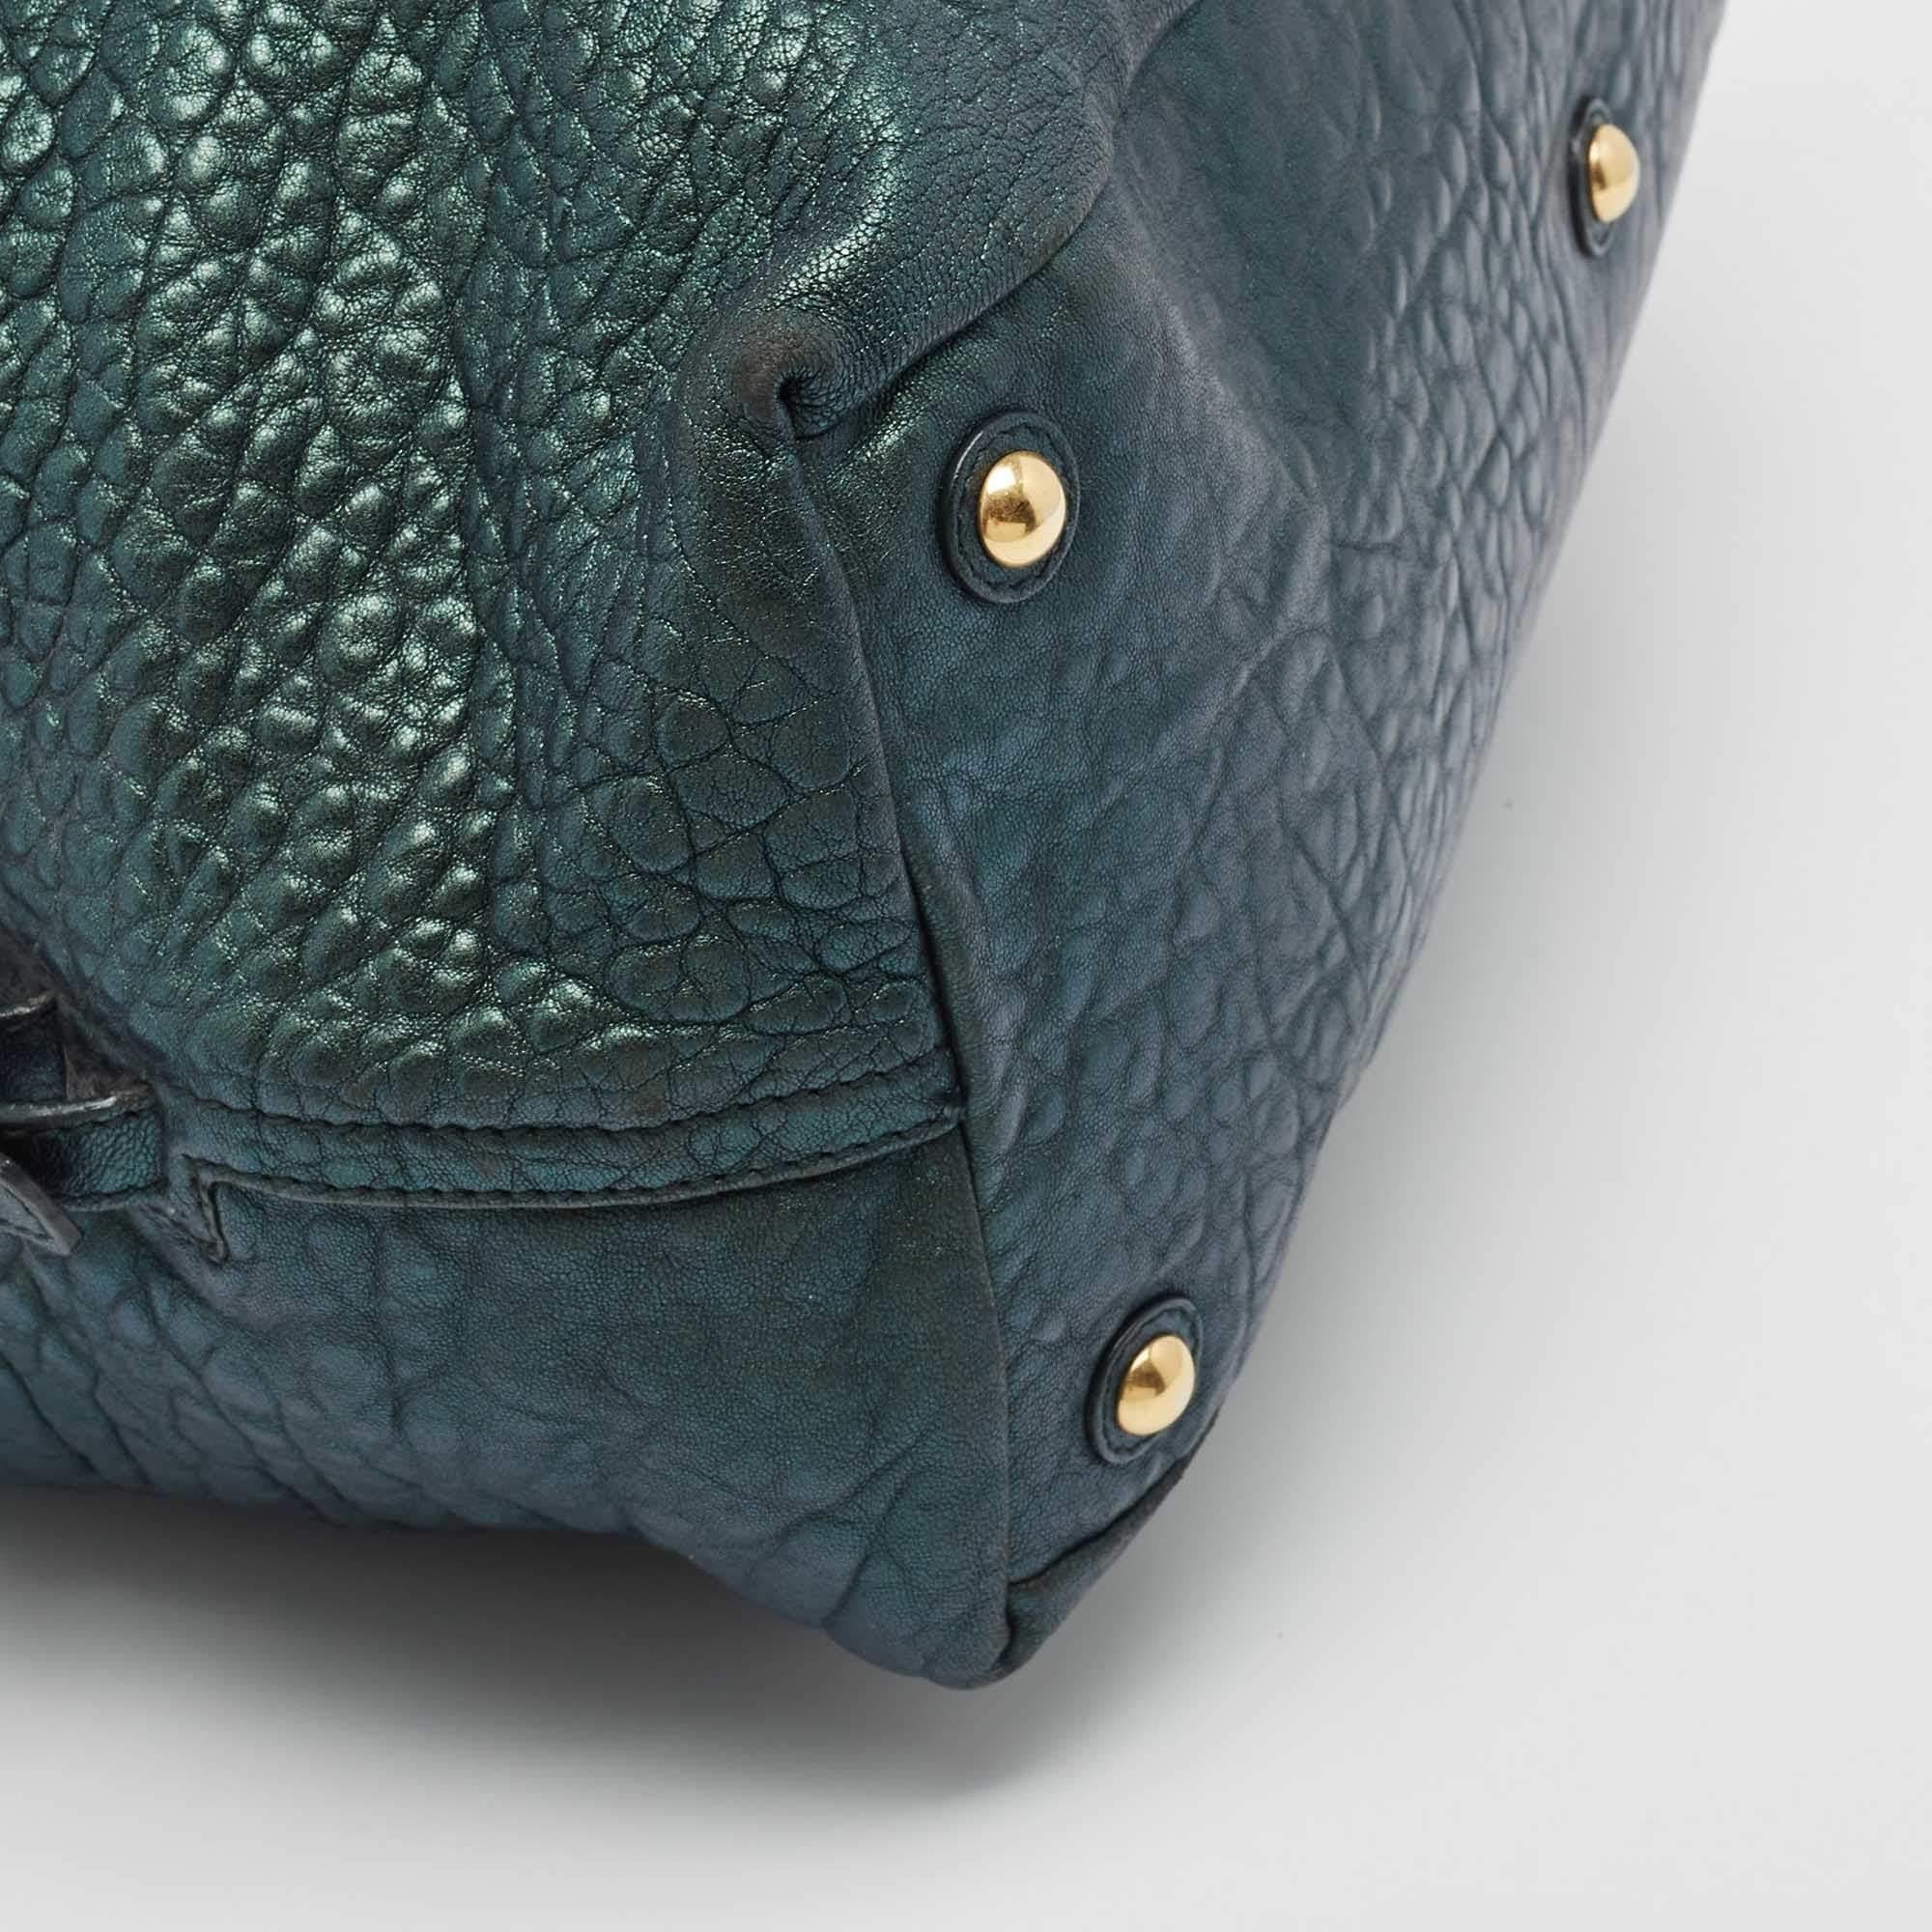 Yves Saint Laurent Metallic Green Leather Medium Easy Y Bag For Sale 2